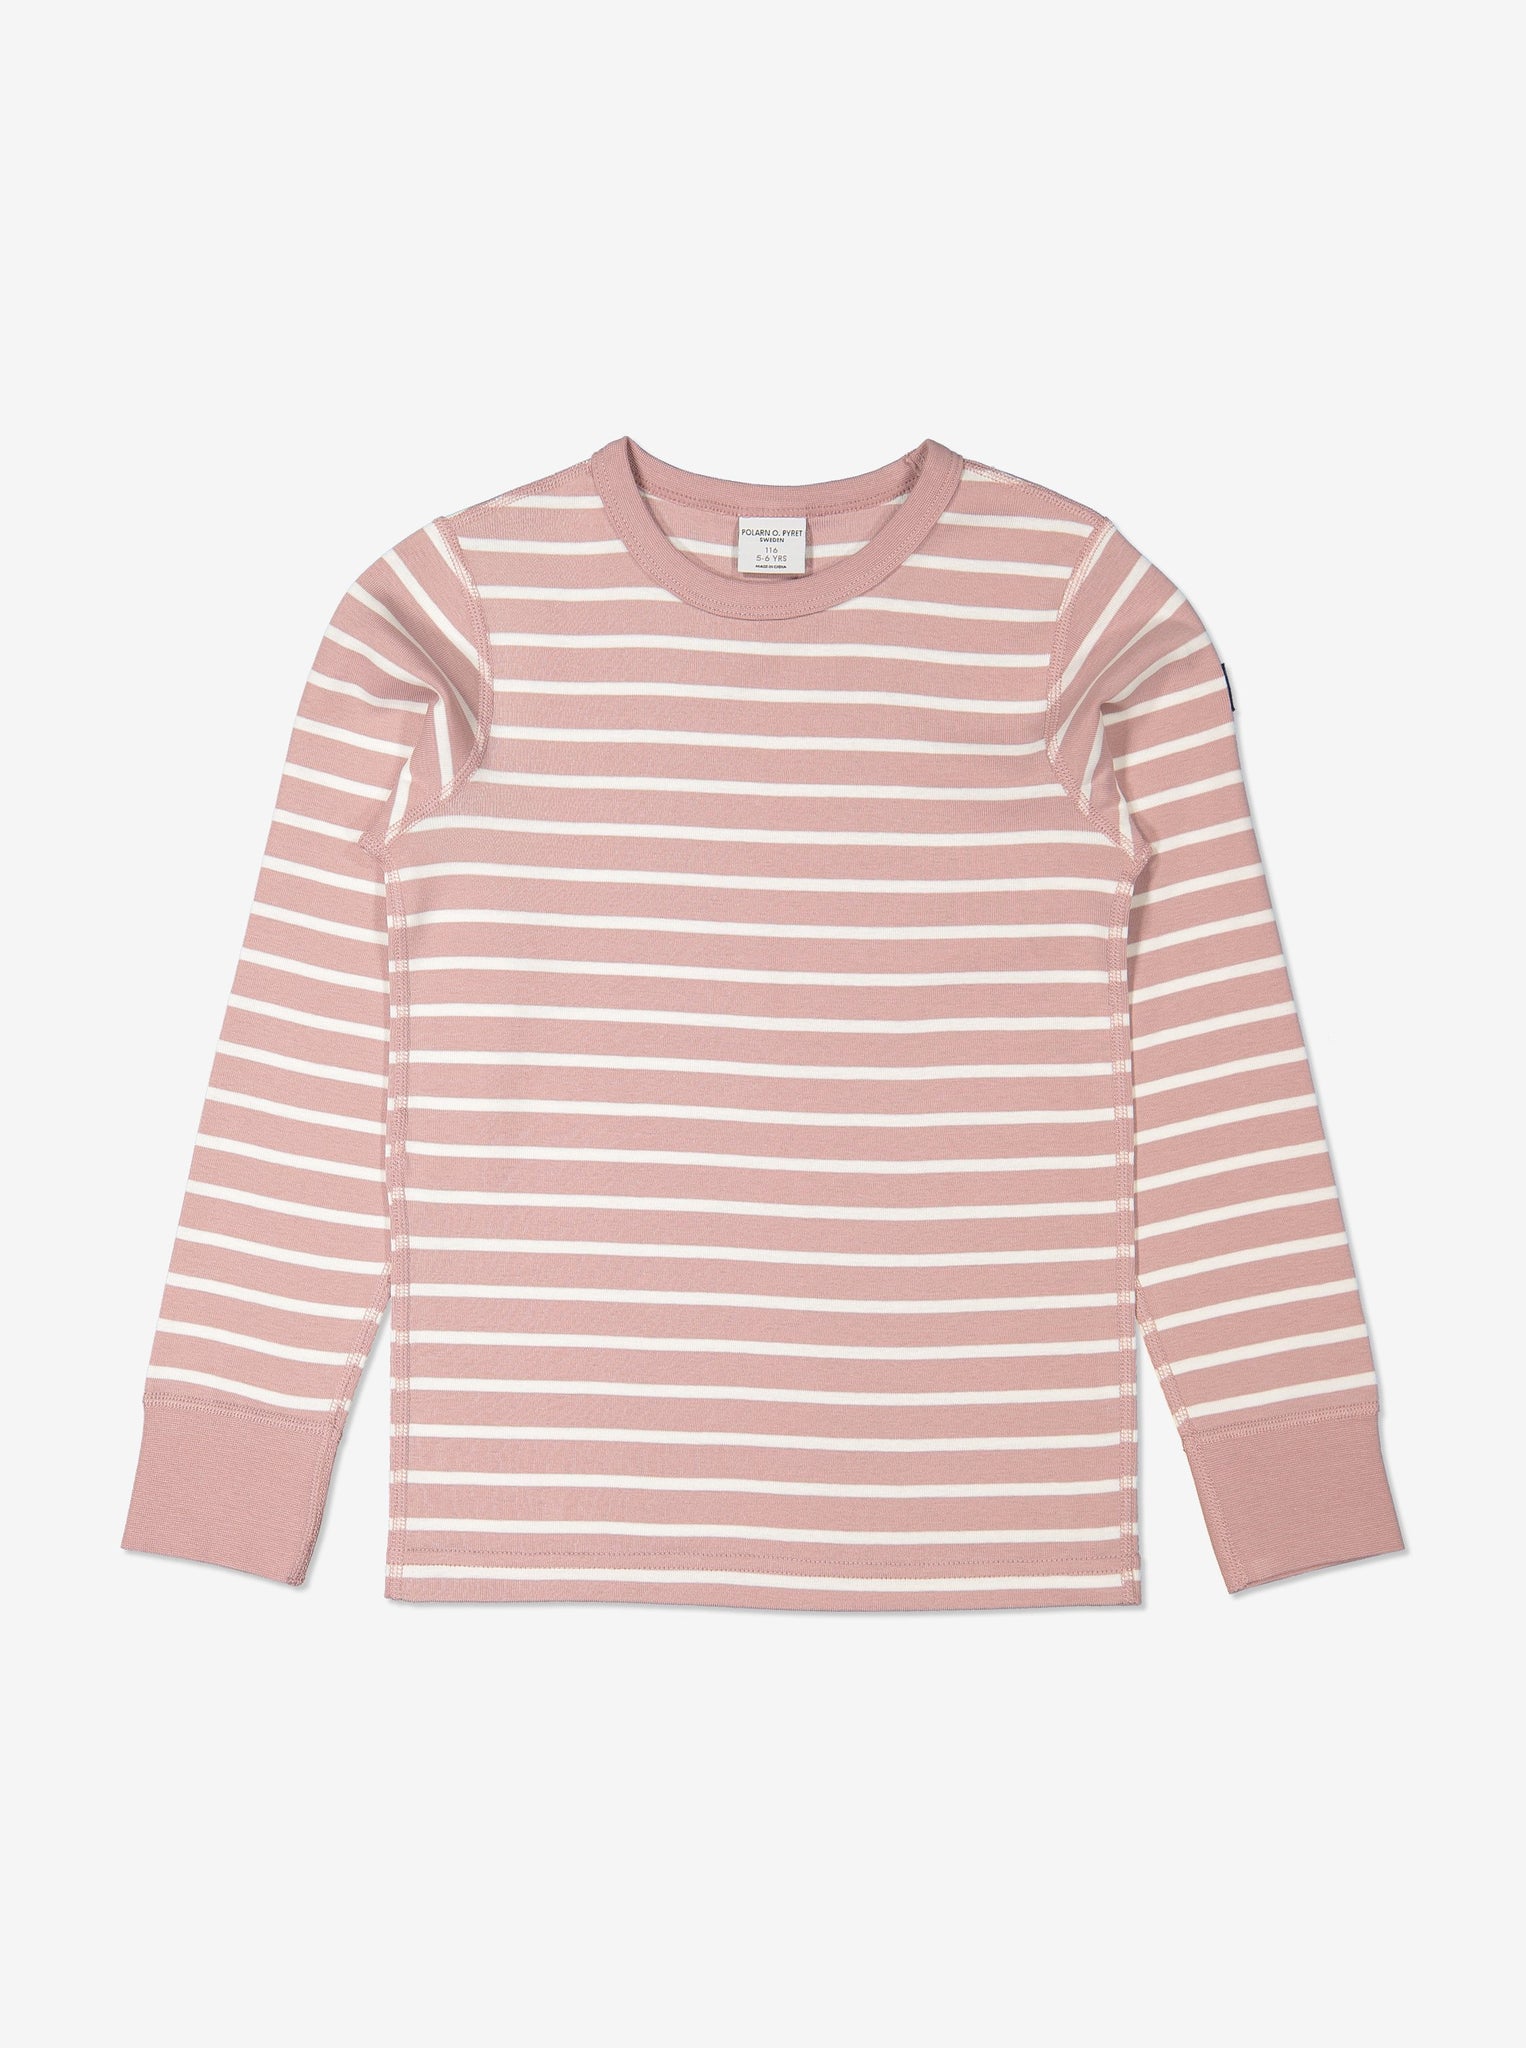 Kids Striped Pink Organic Top